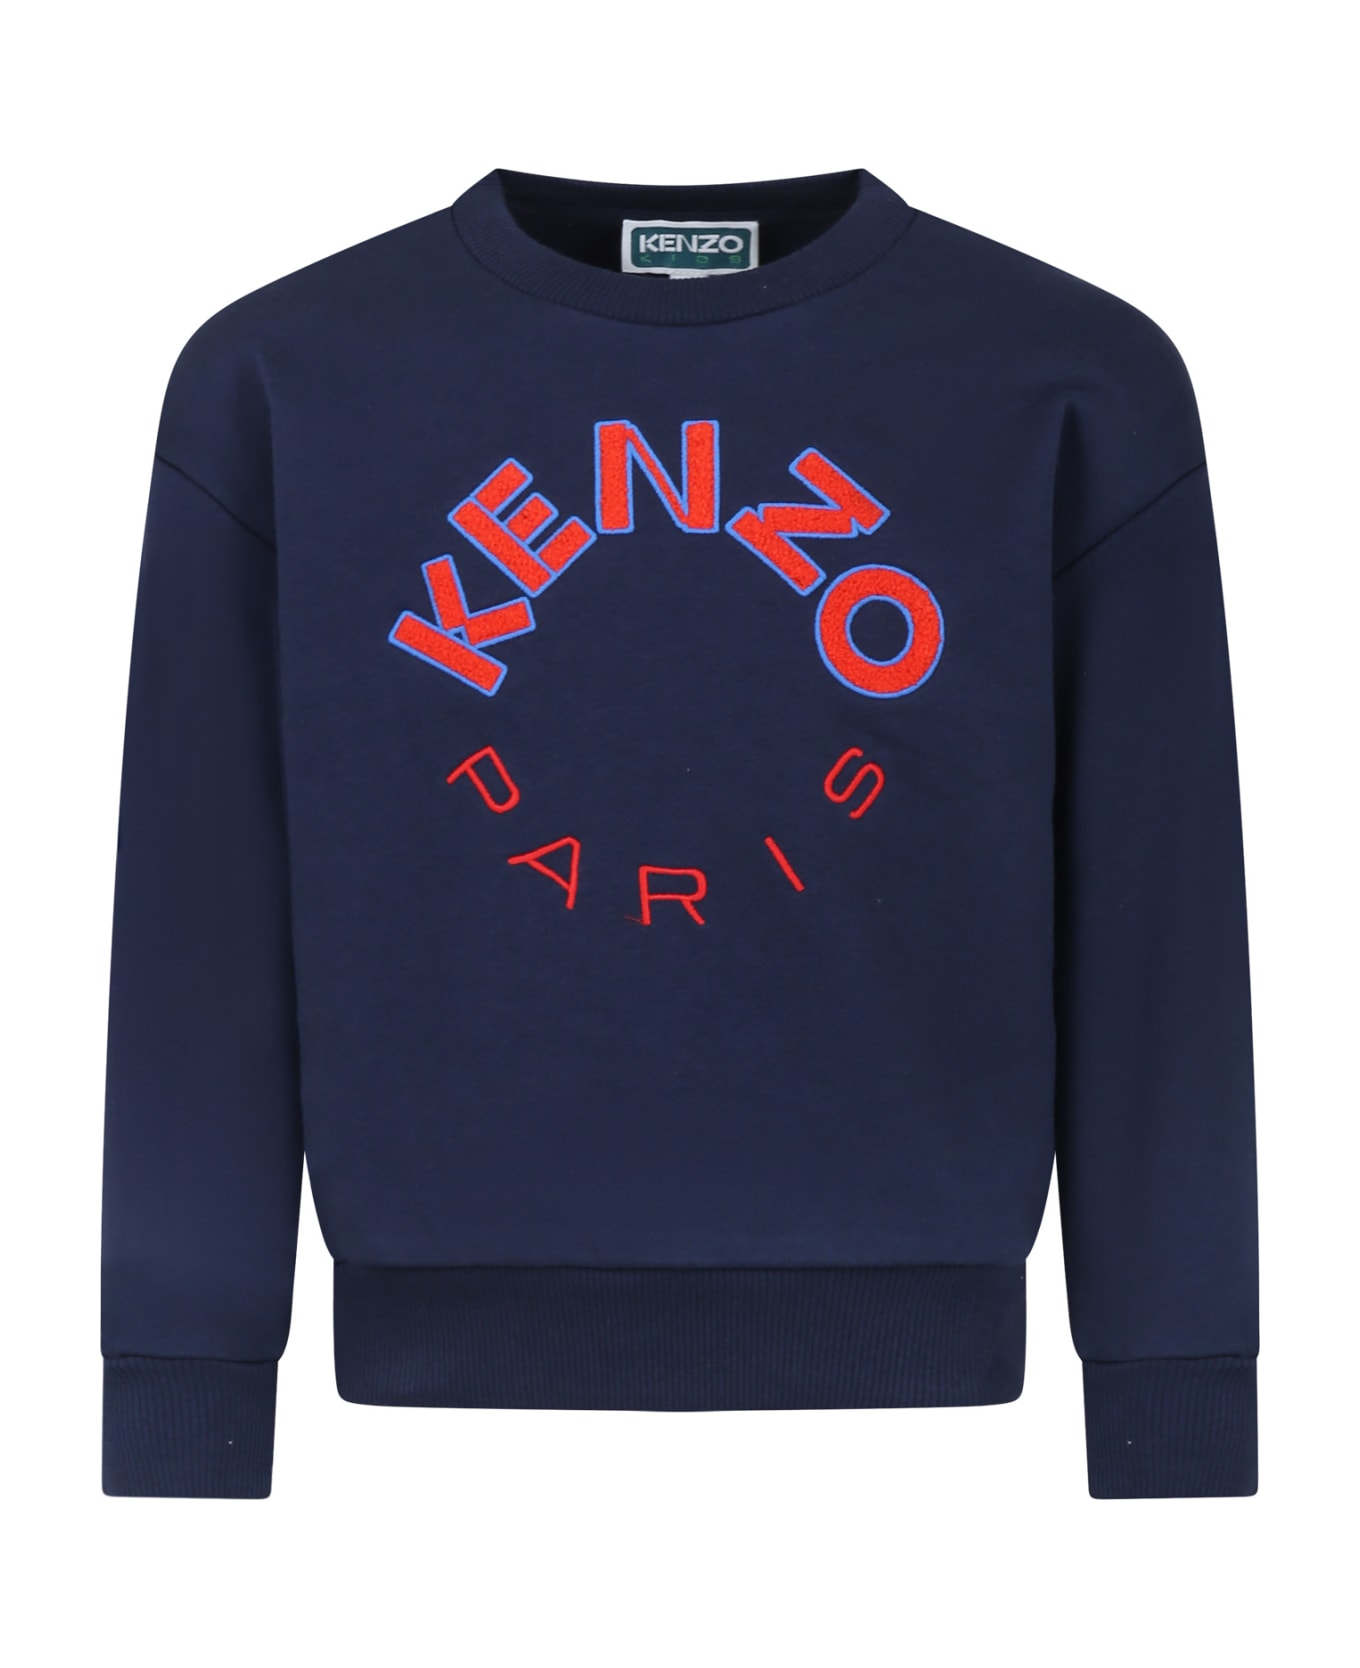 Kenzo Kids Blue Sweatshirt For Boy With Logo - A Marine